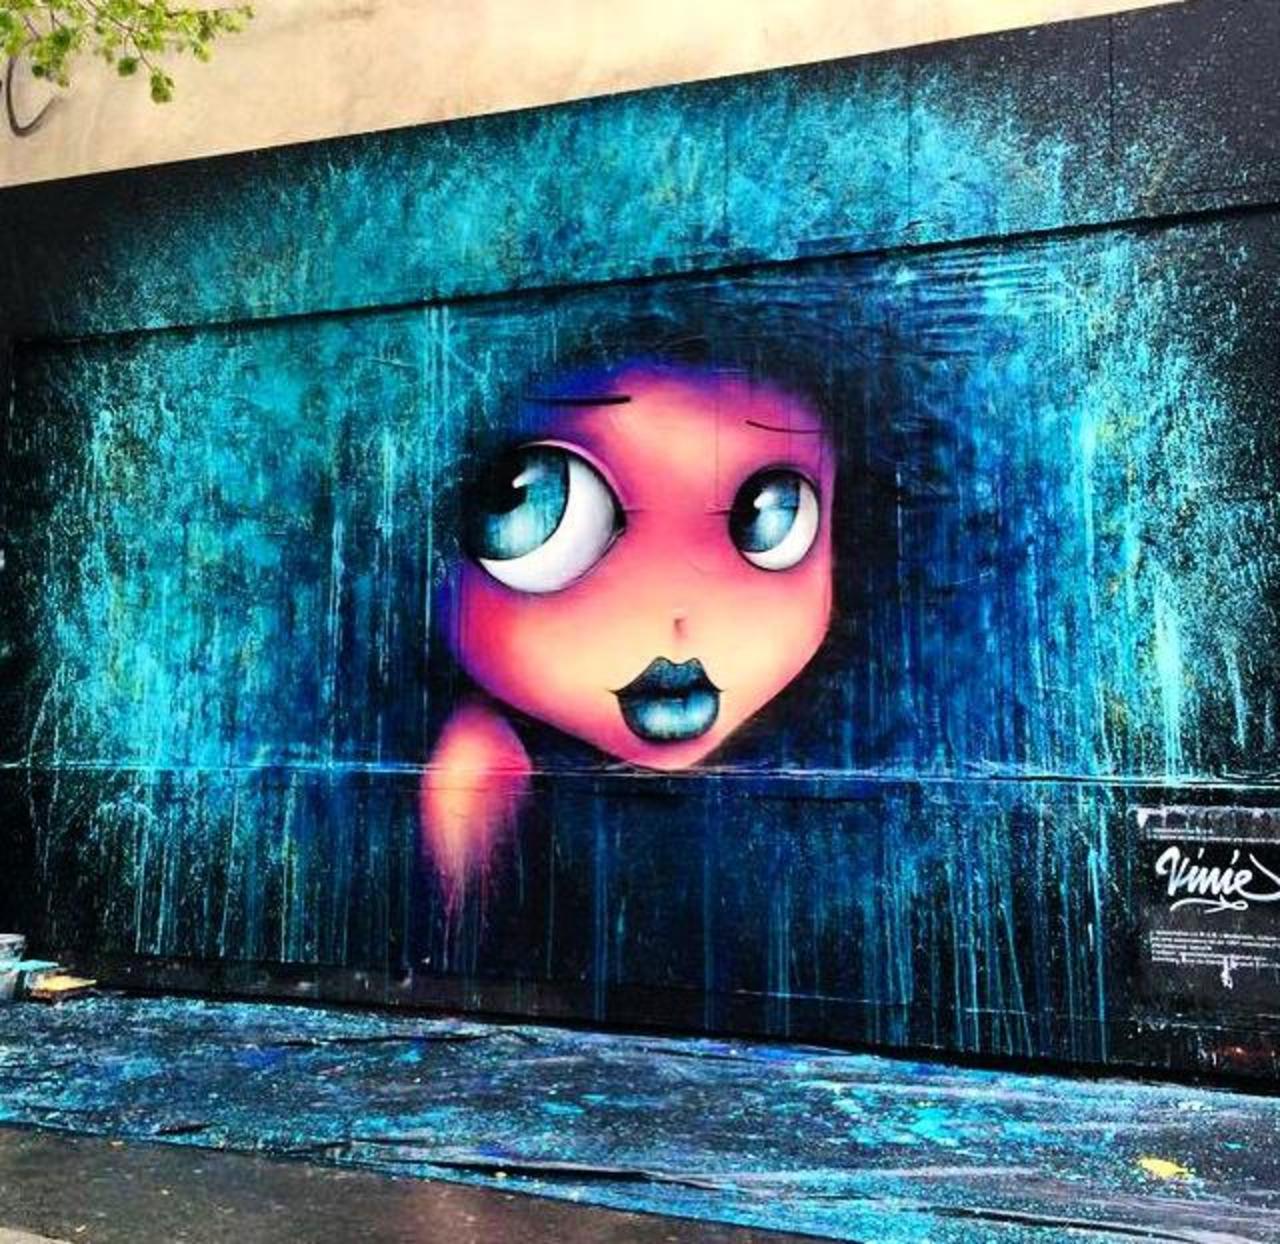 New Street Art by VinieGraffiti in Paris

#art #arte #graffiti #streetart http://t.co/dzC4VV8ukG